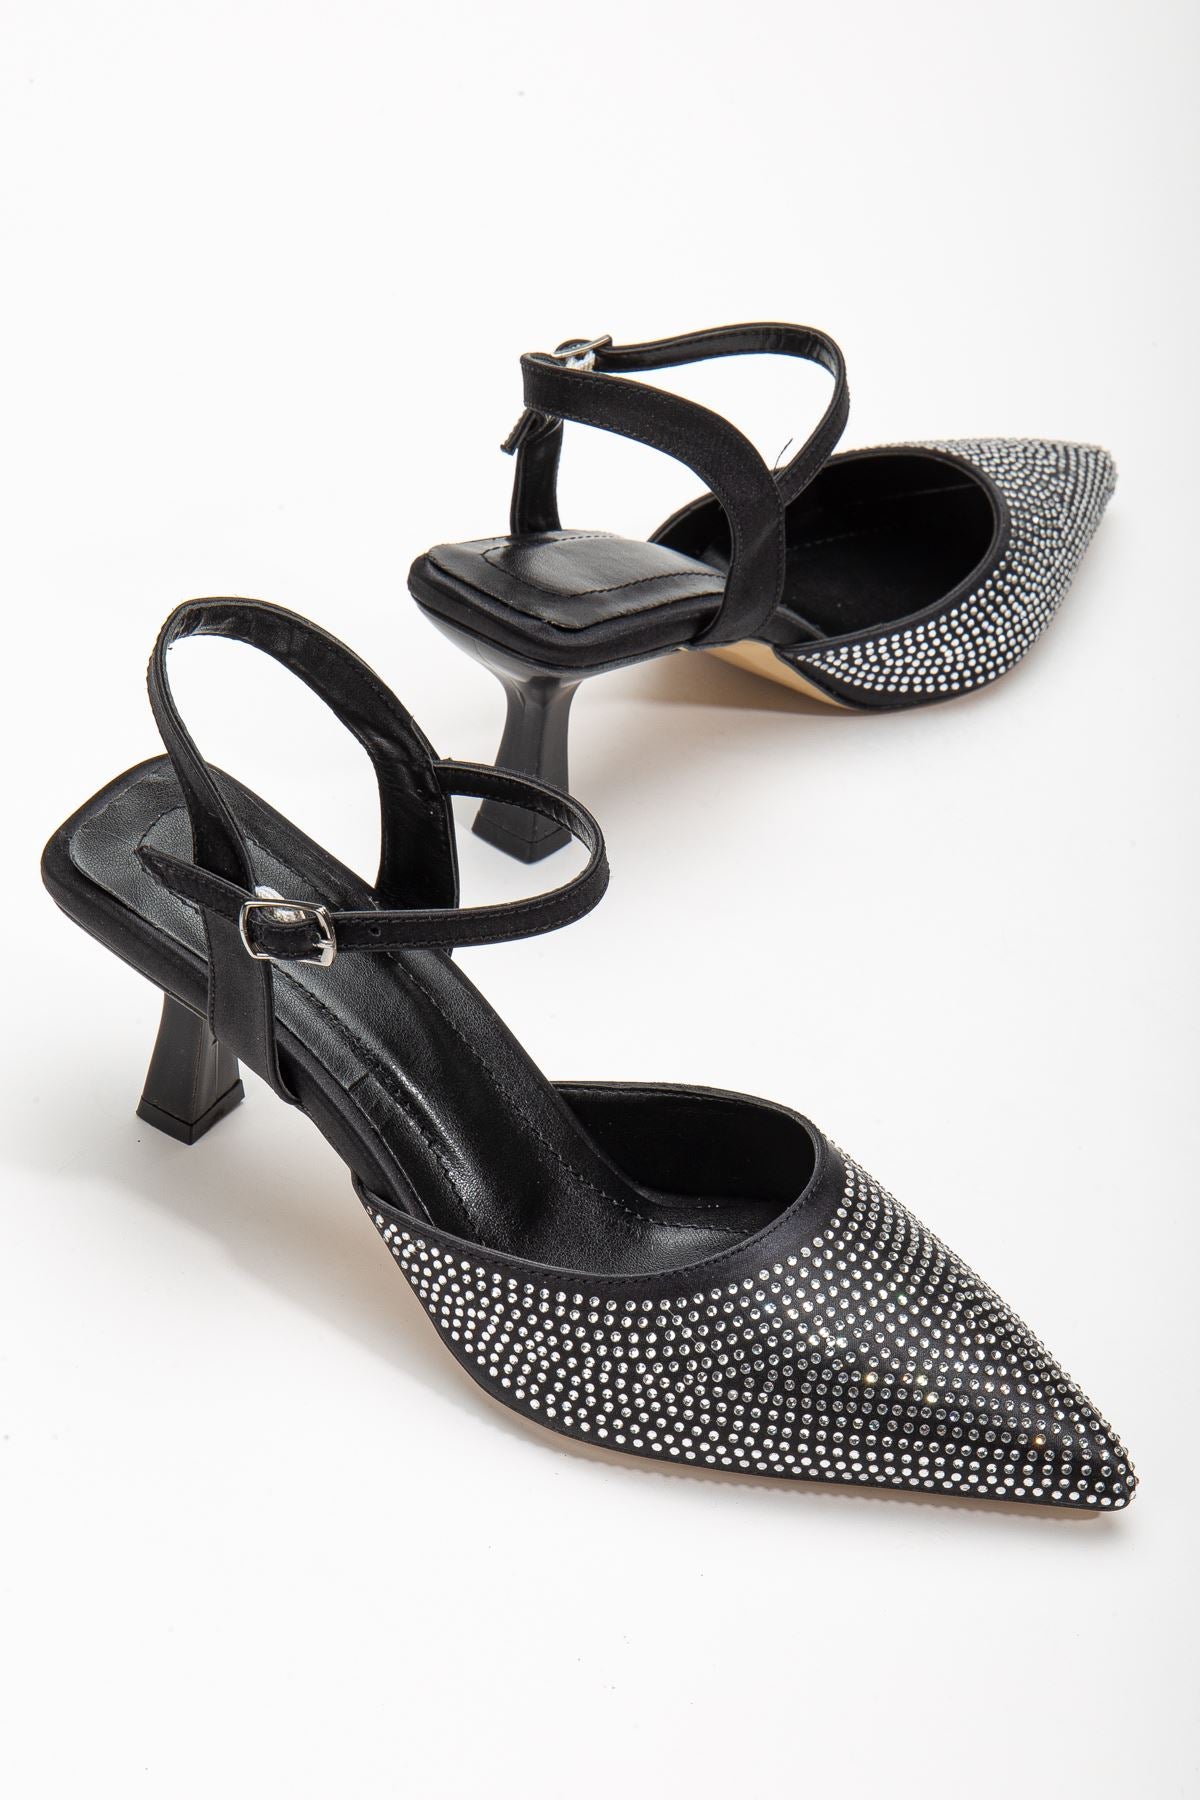 Sinda Black Satin Stone Detailed Thin Heeled Women's Shoes - STREETMODE™